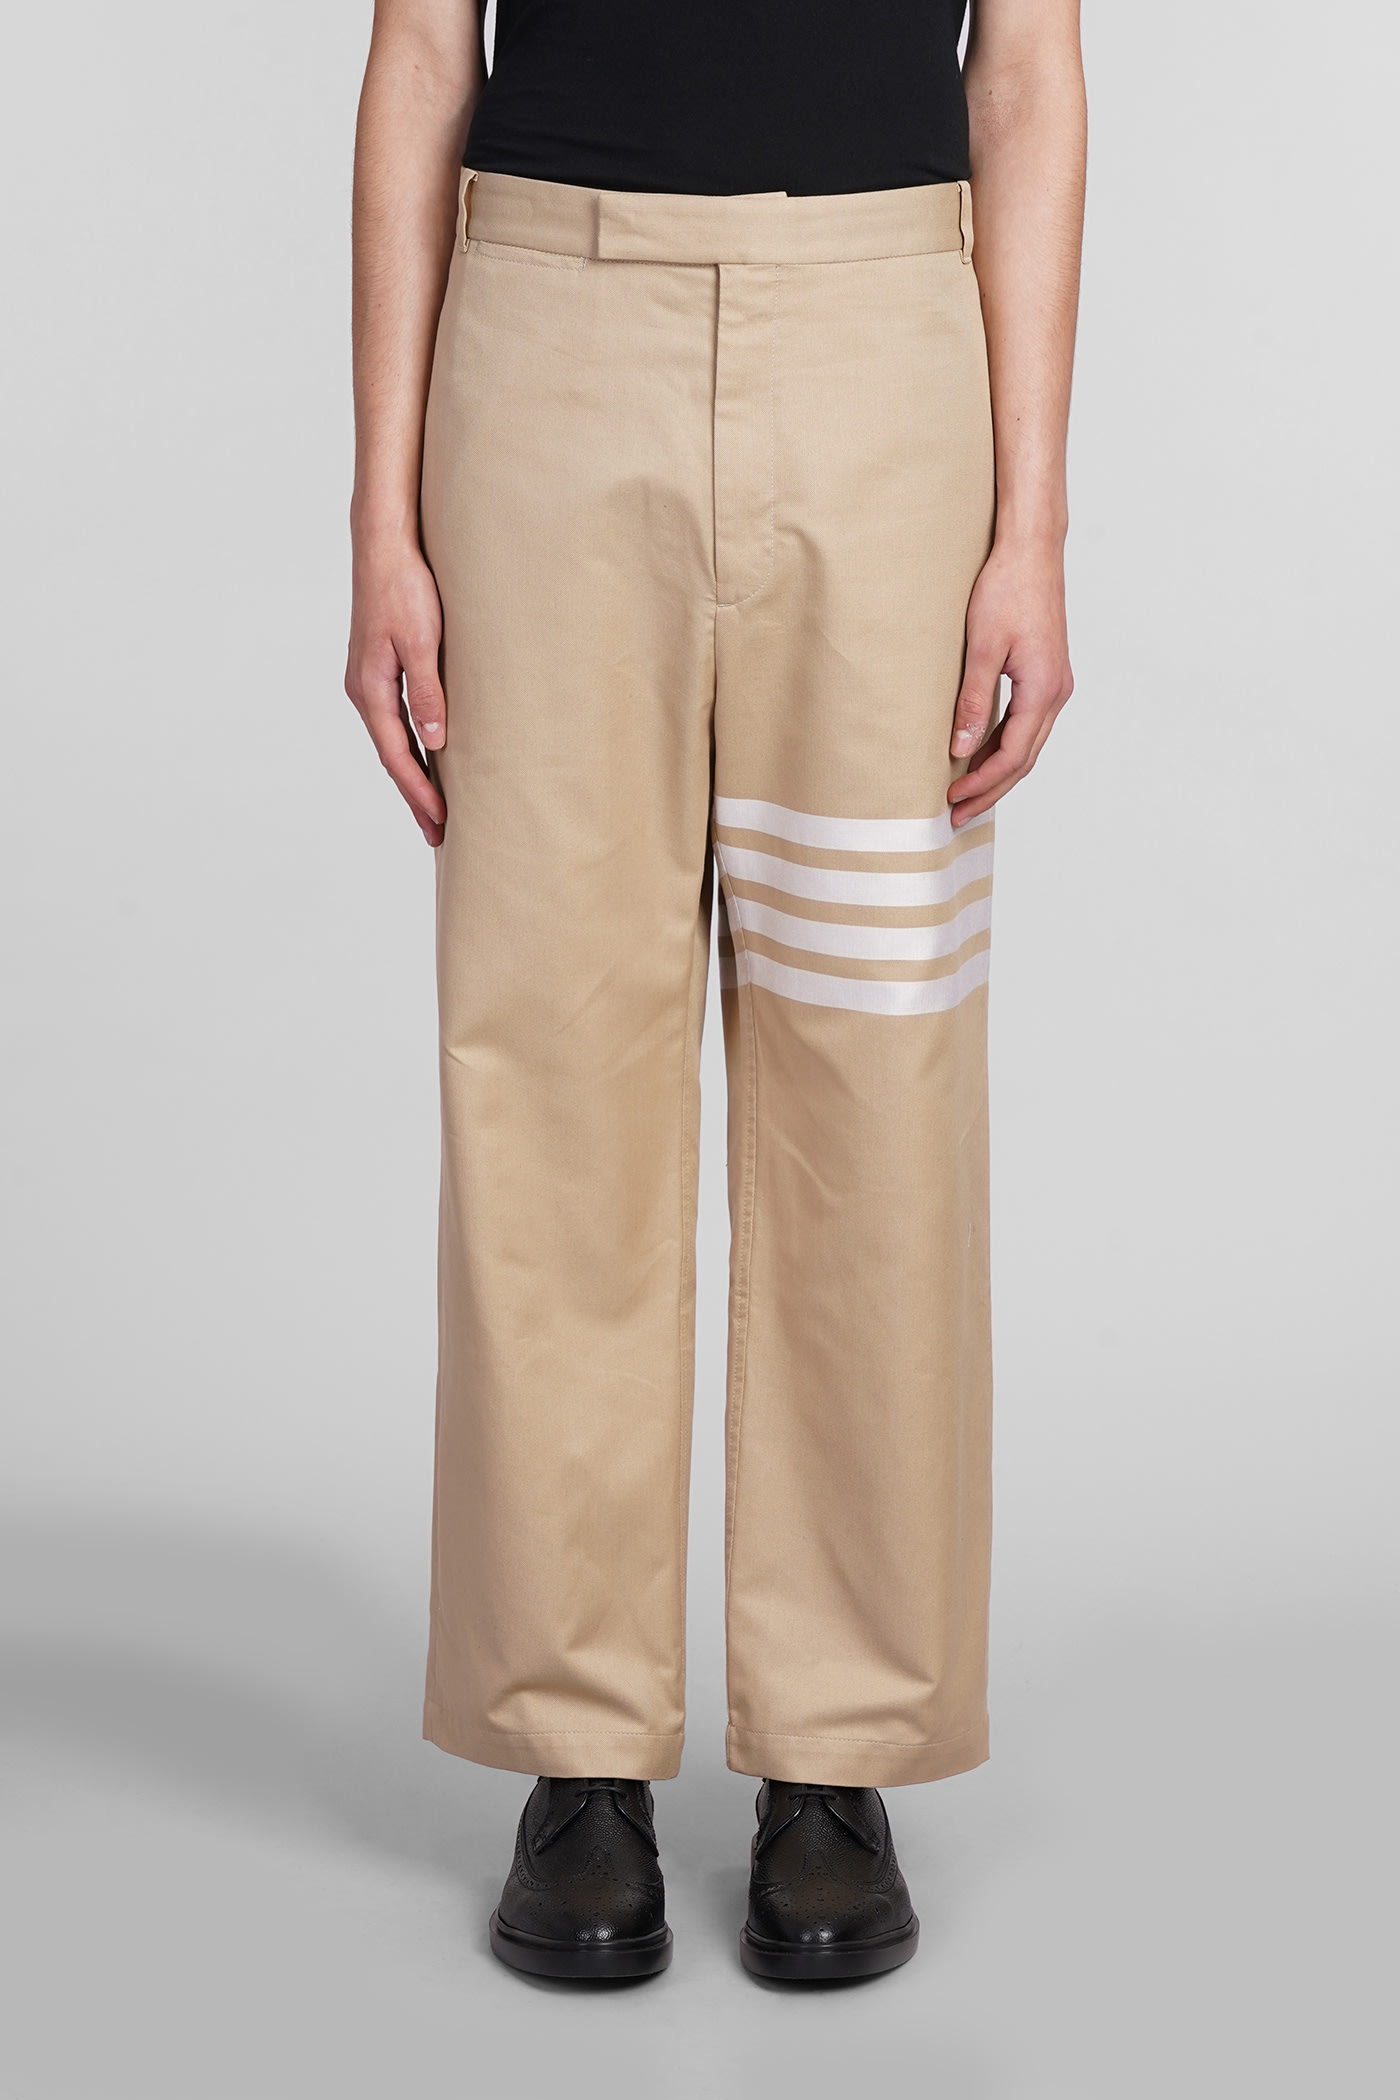 Thom Browne Pants In Beige Cotton